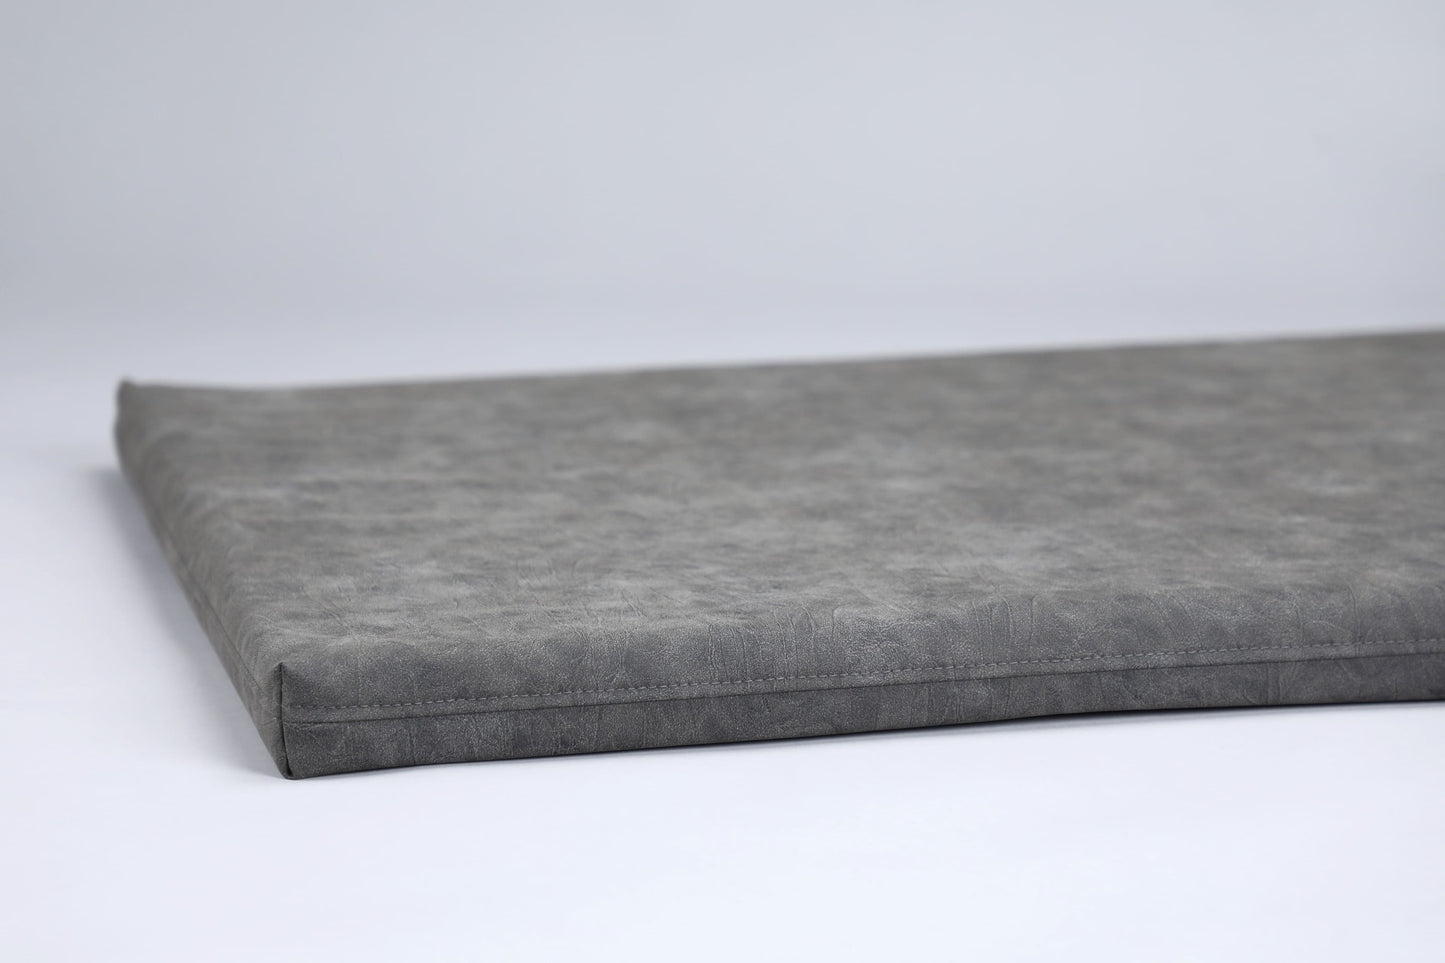 Dog crate mattress | Travel dog bed | 2-sided | Water resistant | IRON GREY - premium dog goods handmade in Europe by animalistus